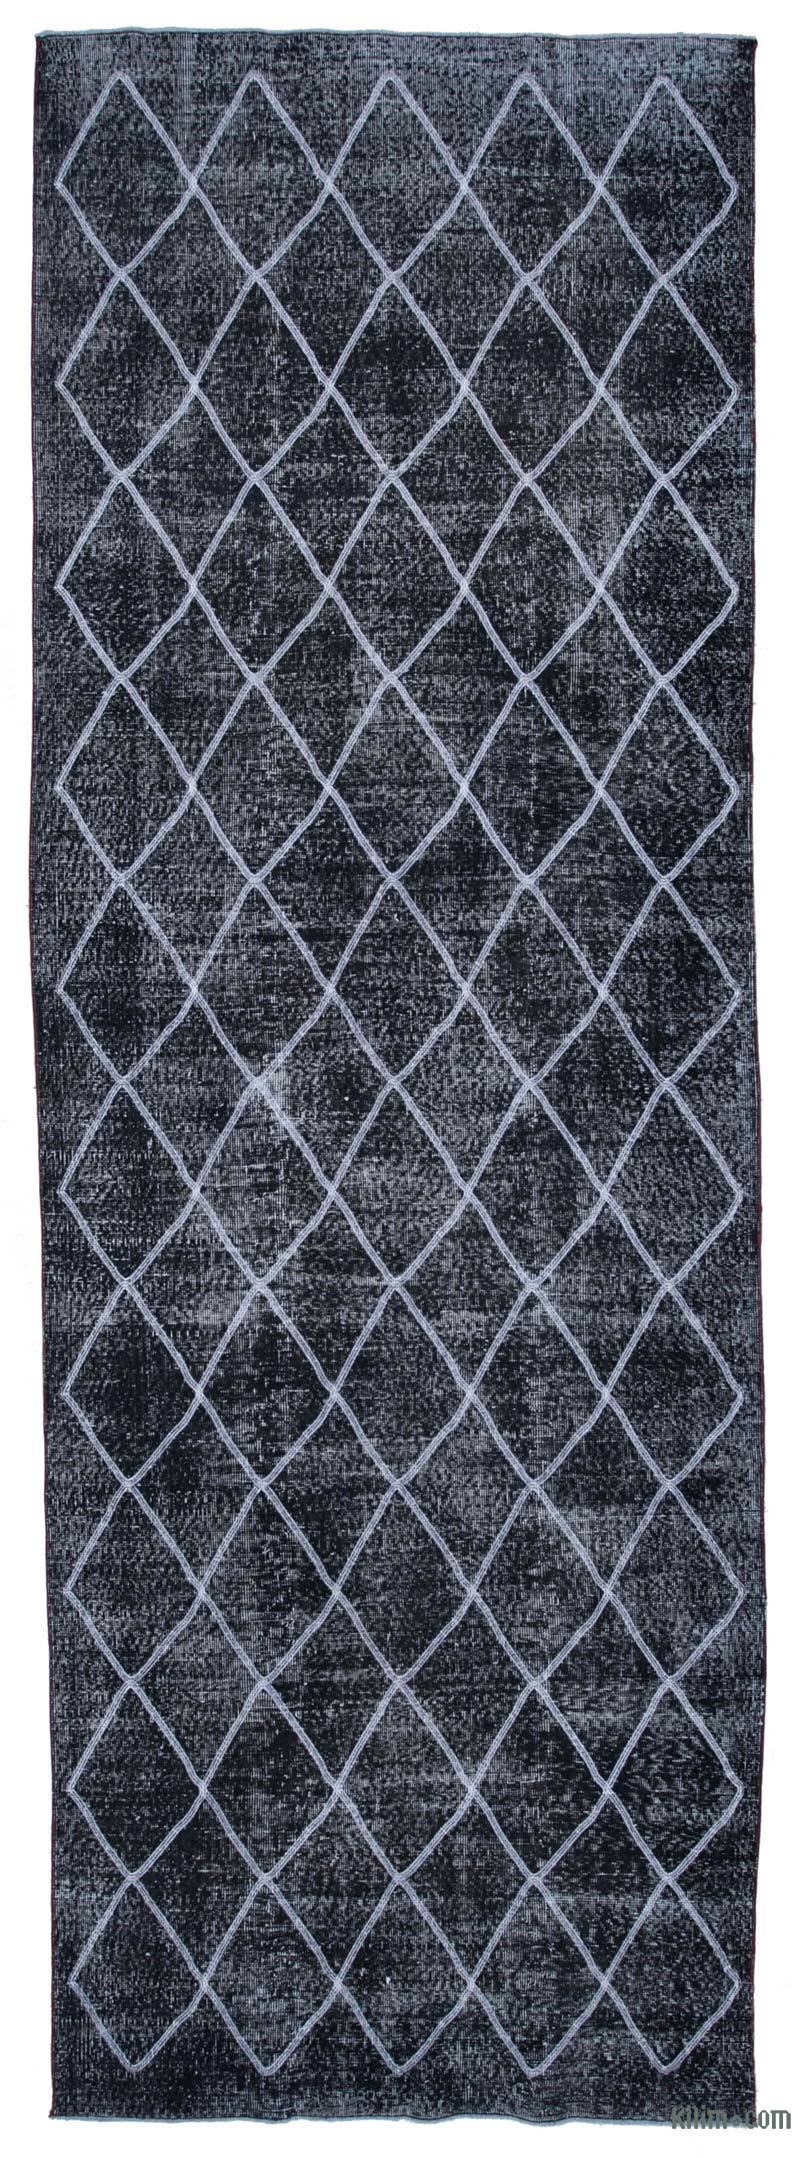 Negro Alfombra Turca bordada sobre teñida vintage - 142 cm x 415 cm - K0038737